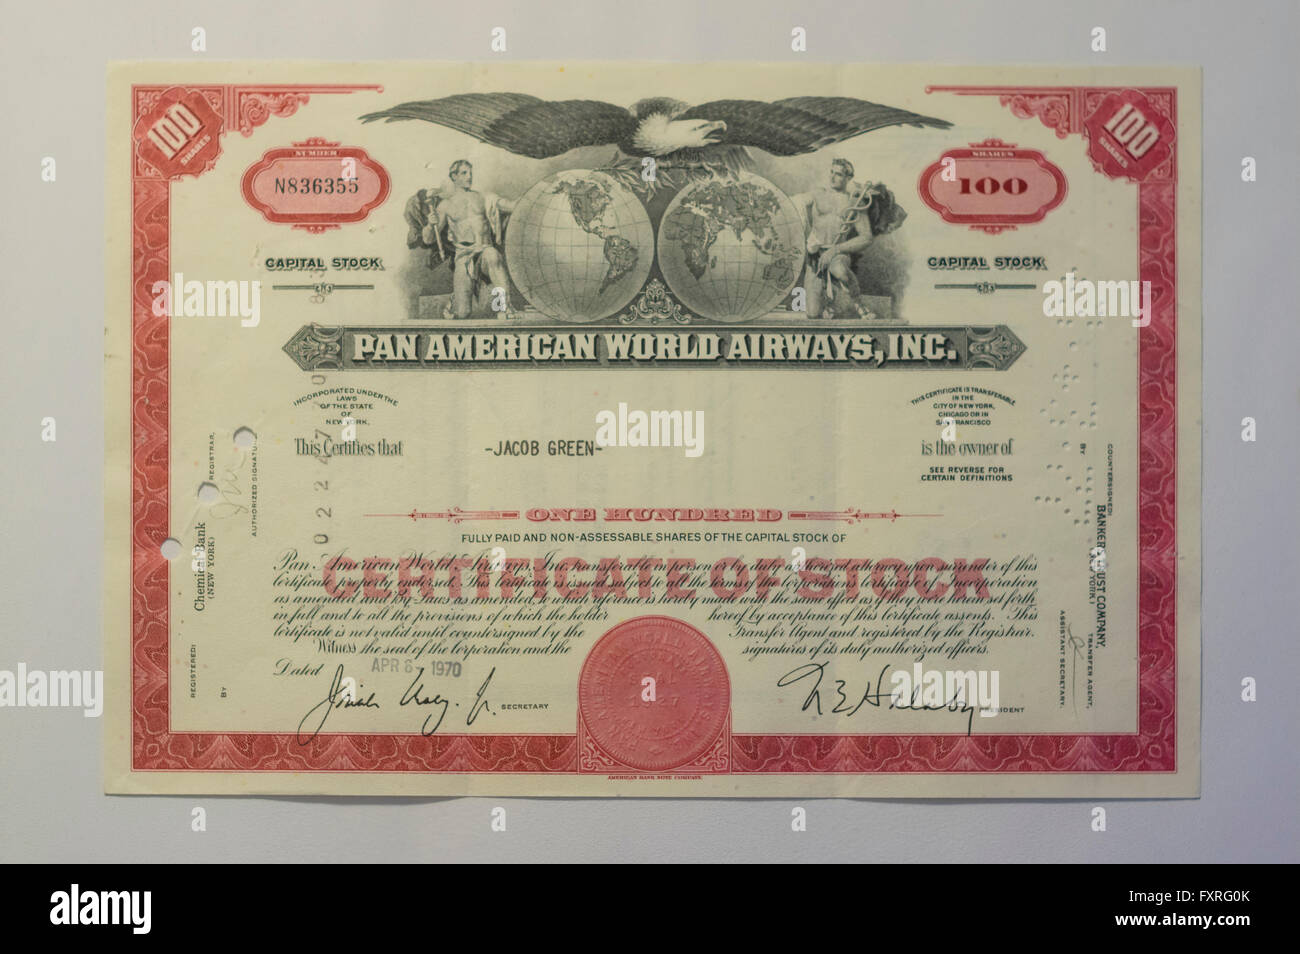 Ies Années 1970 Pan American World Airways certificat d'actions. Banque D'Images